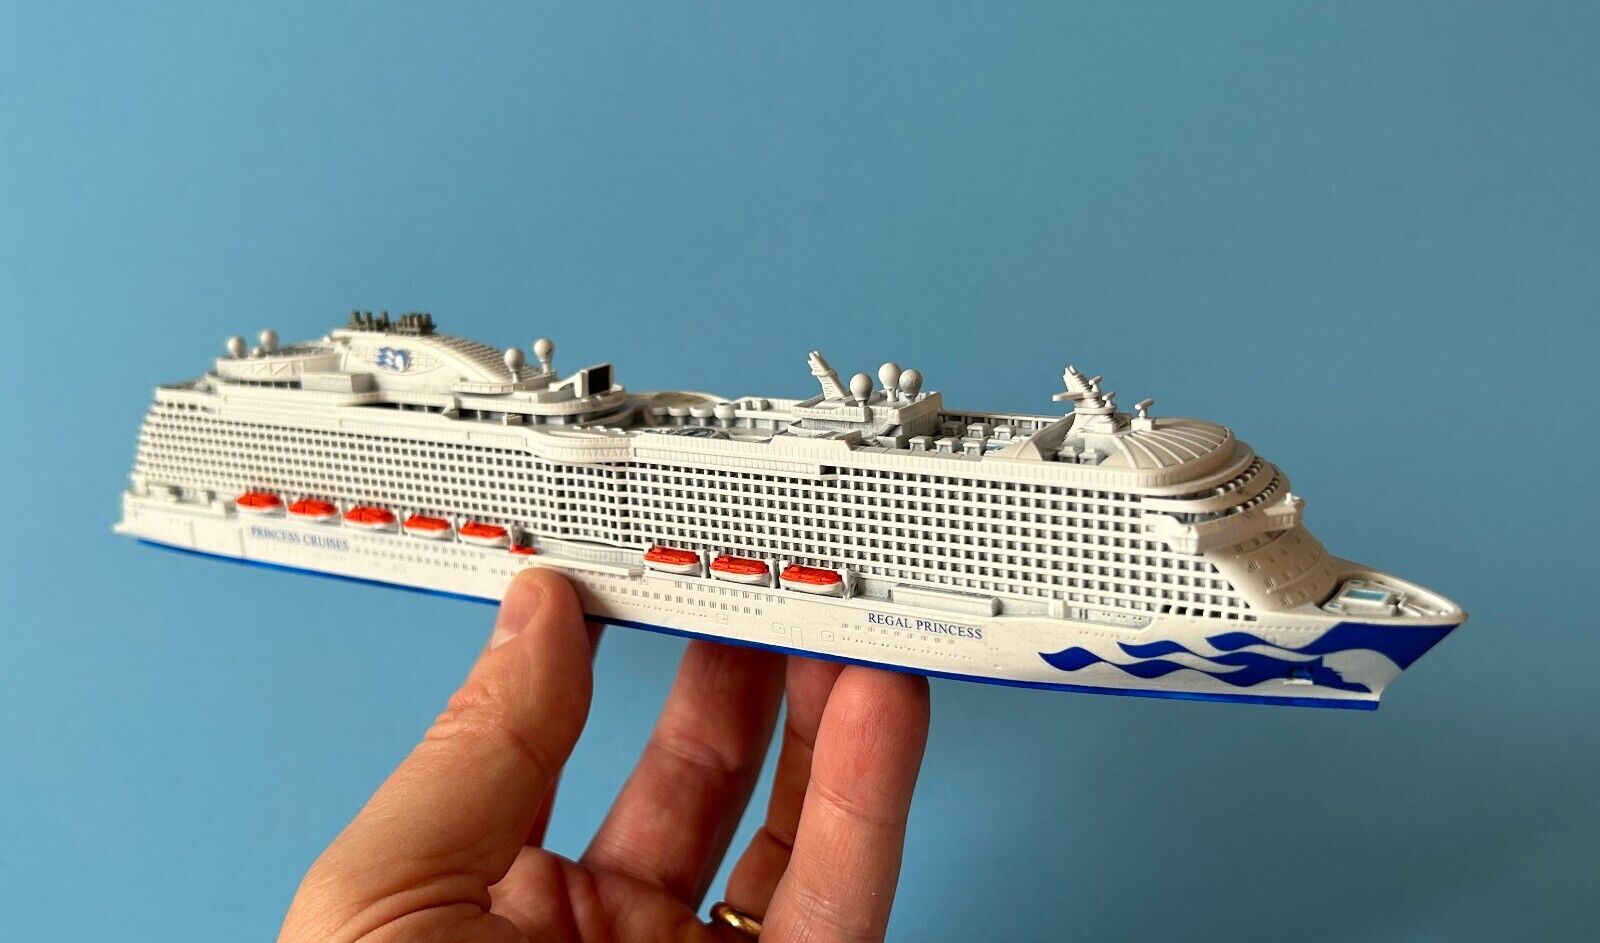 MODEL cruise ship REGAL PRINCESS 1/1250 scale by SCHERBAK USA